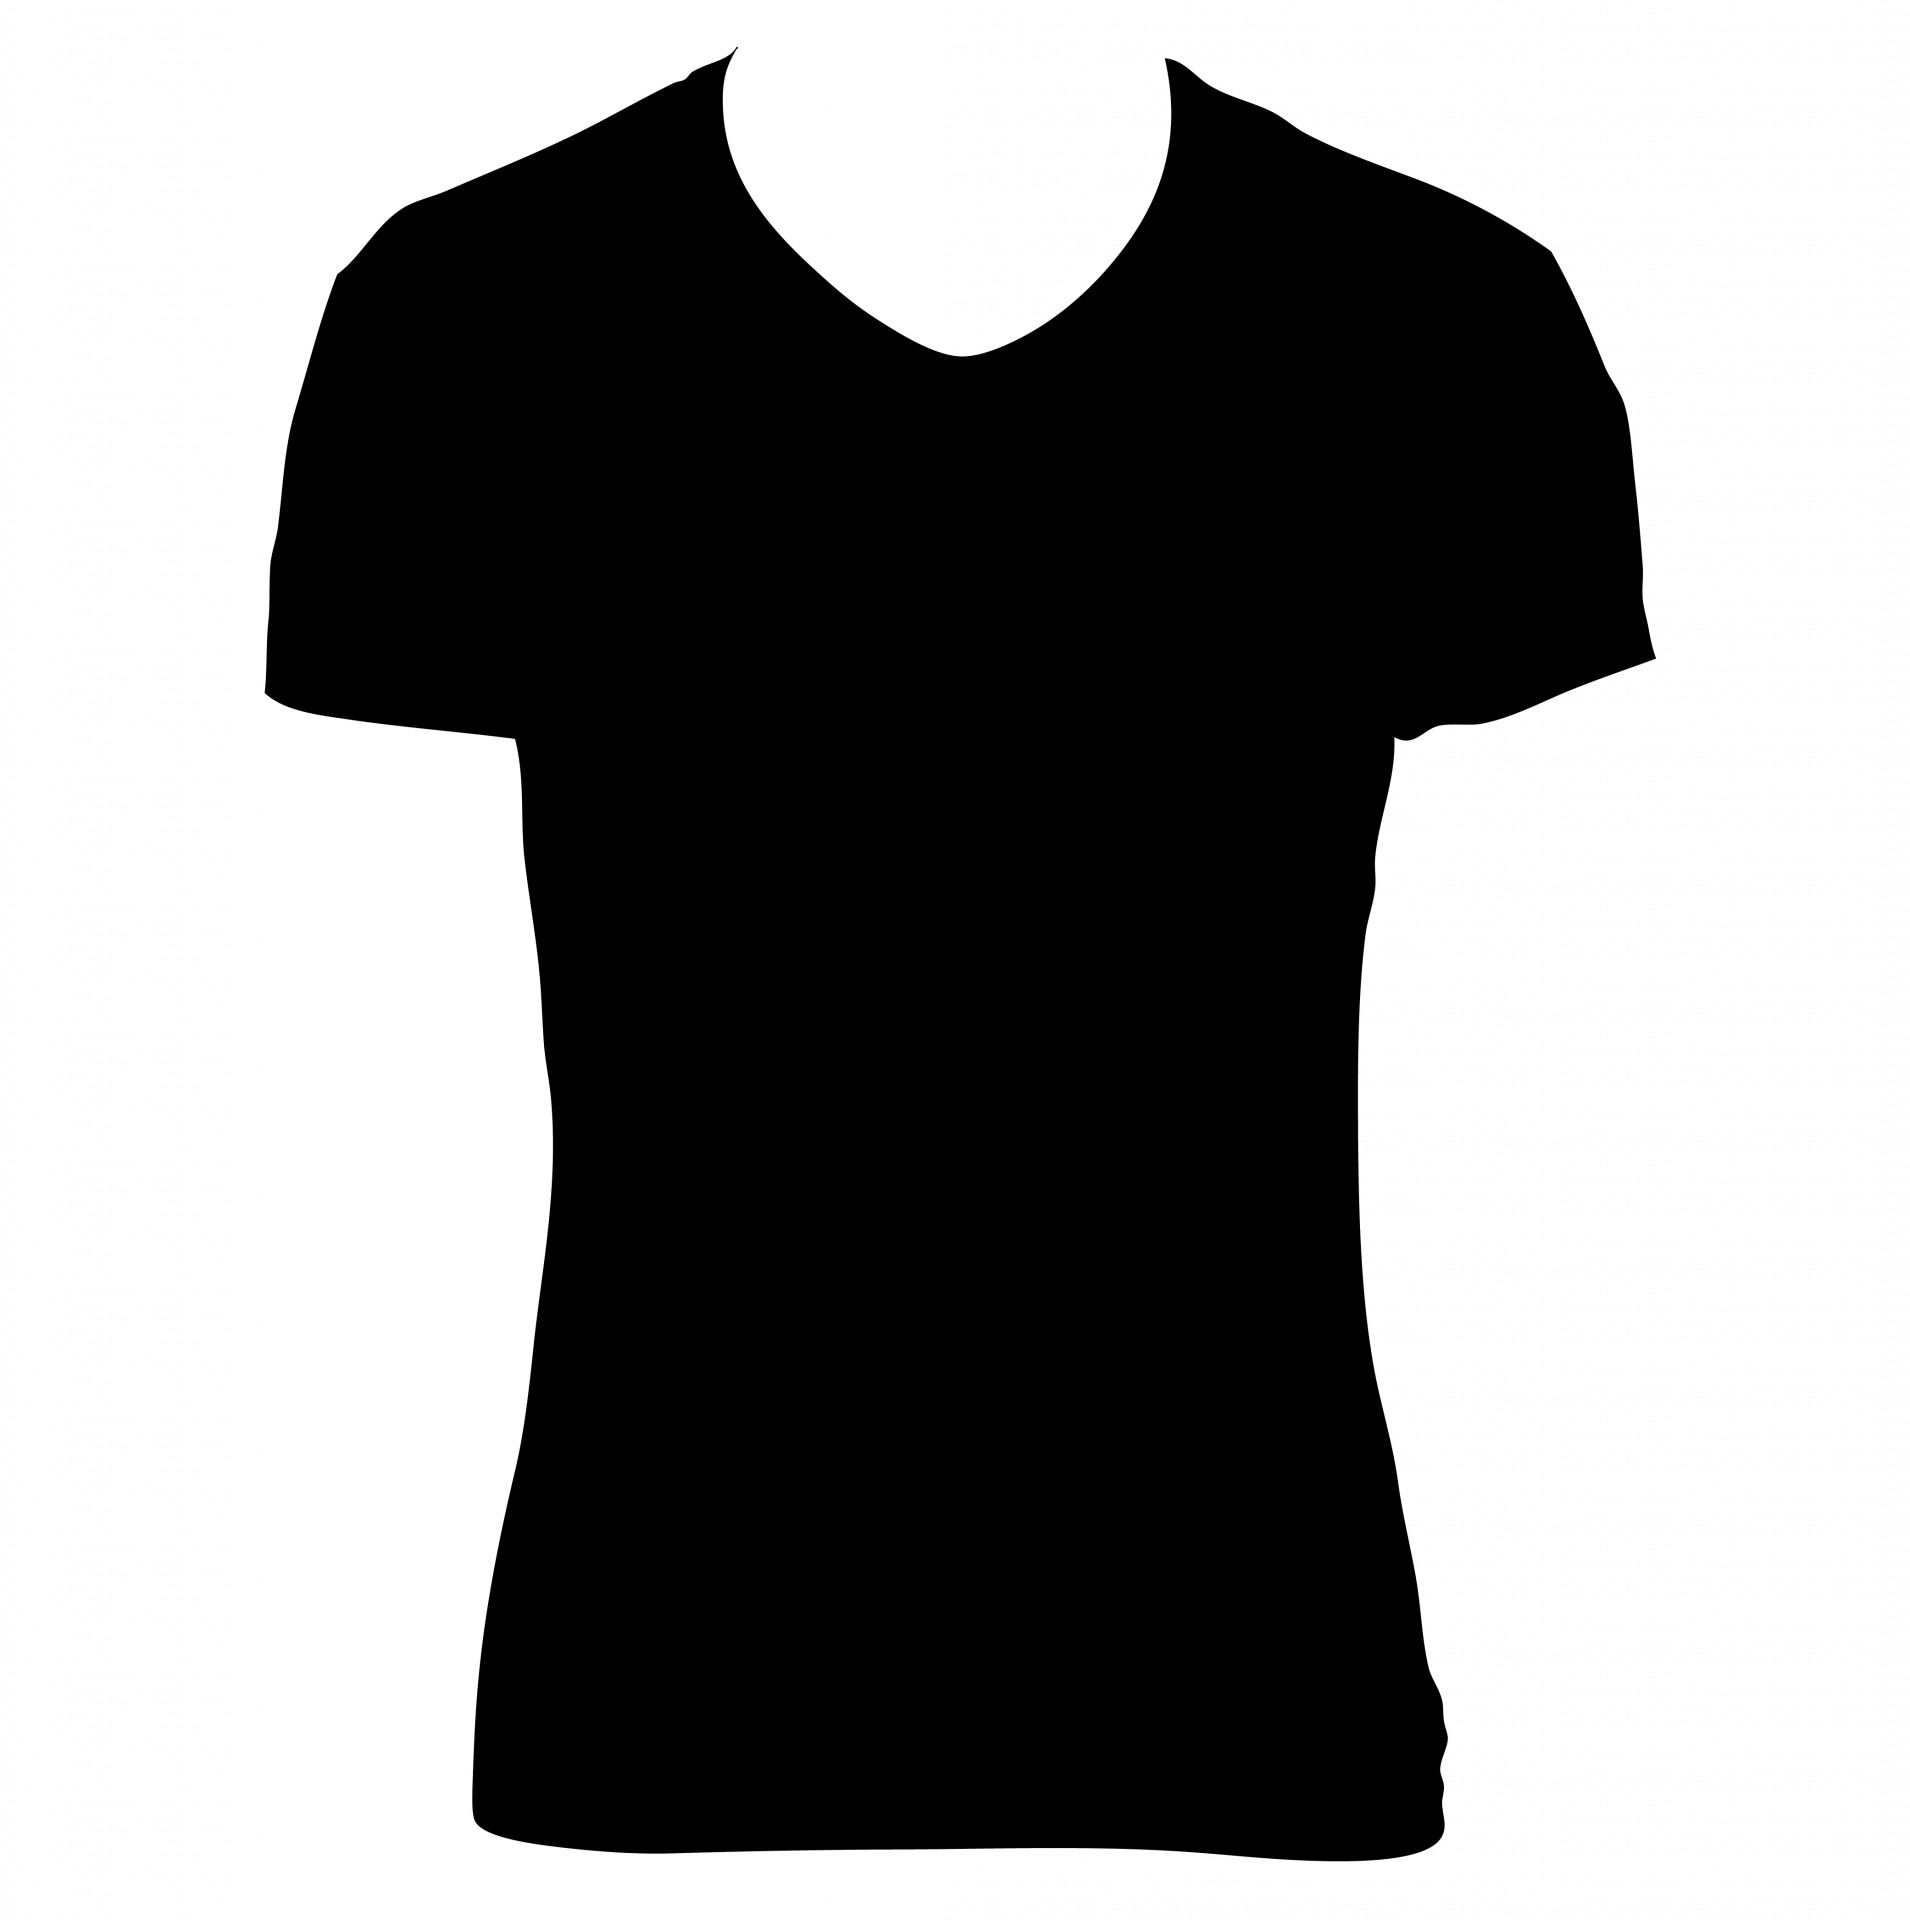 Black t-shirt clipart illustration for scrapbooking